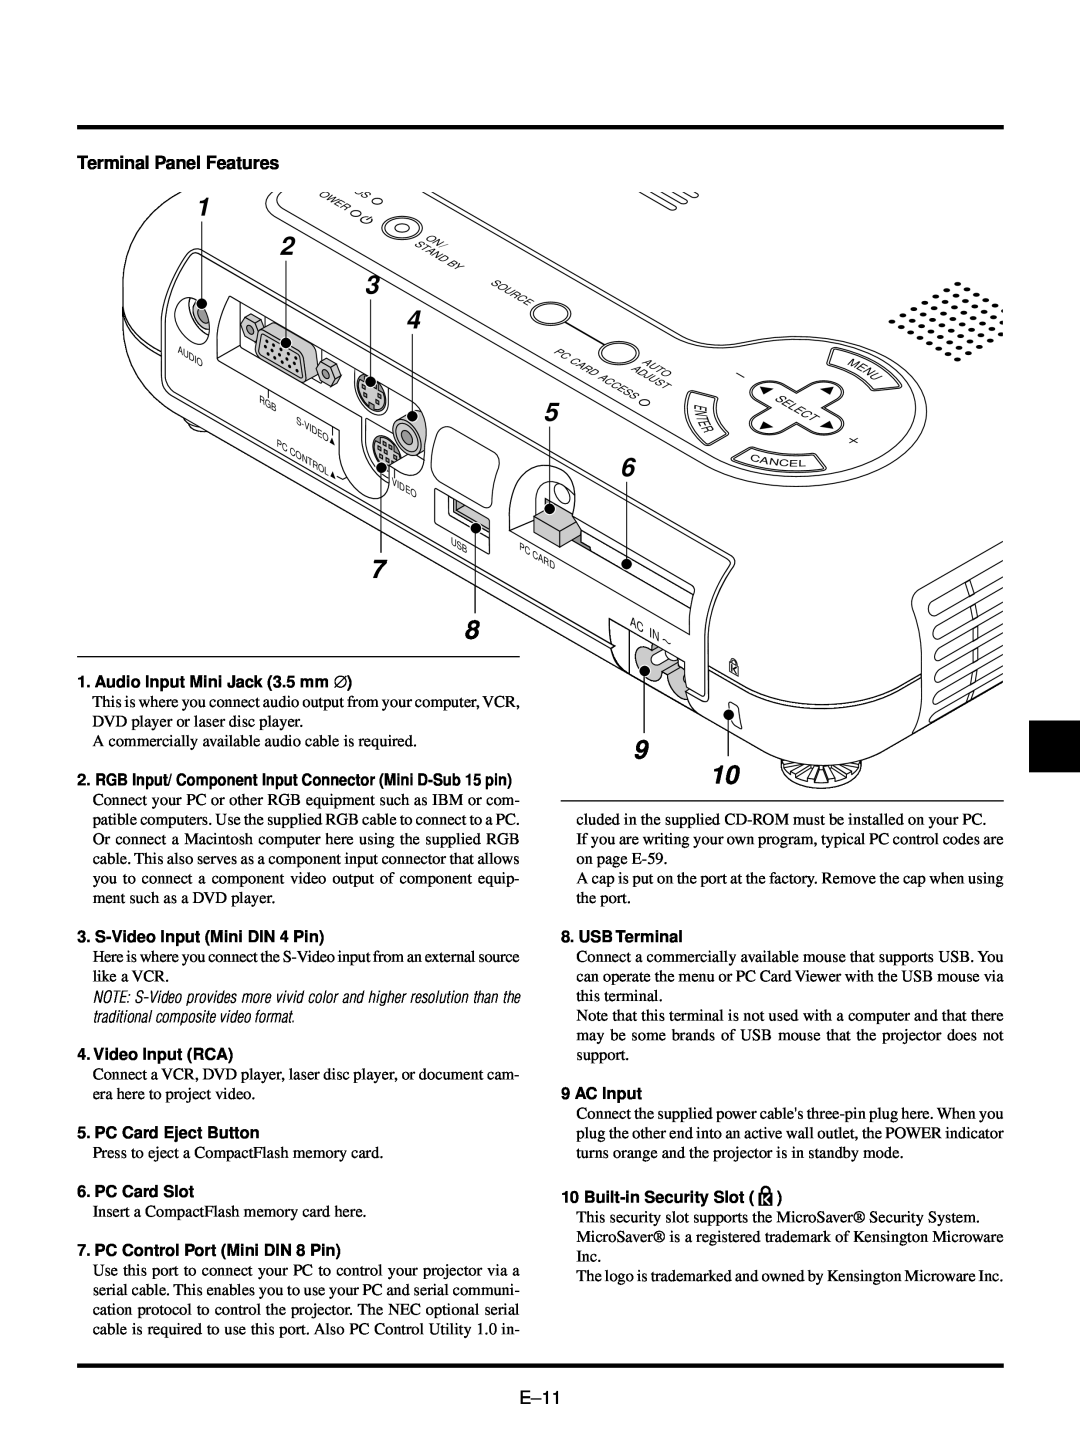 NEC LT150/LT85 user manual 9 10, Terminal Panel Features, E–11 